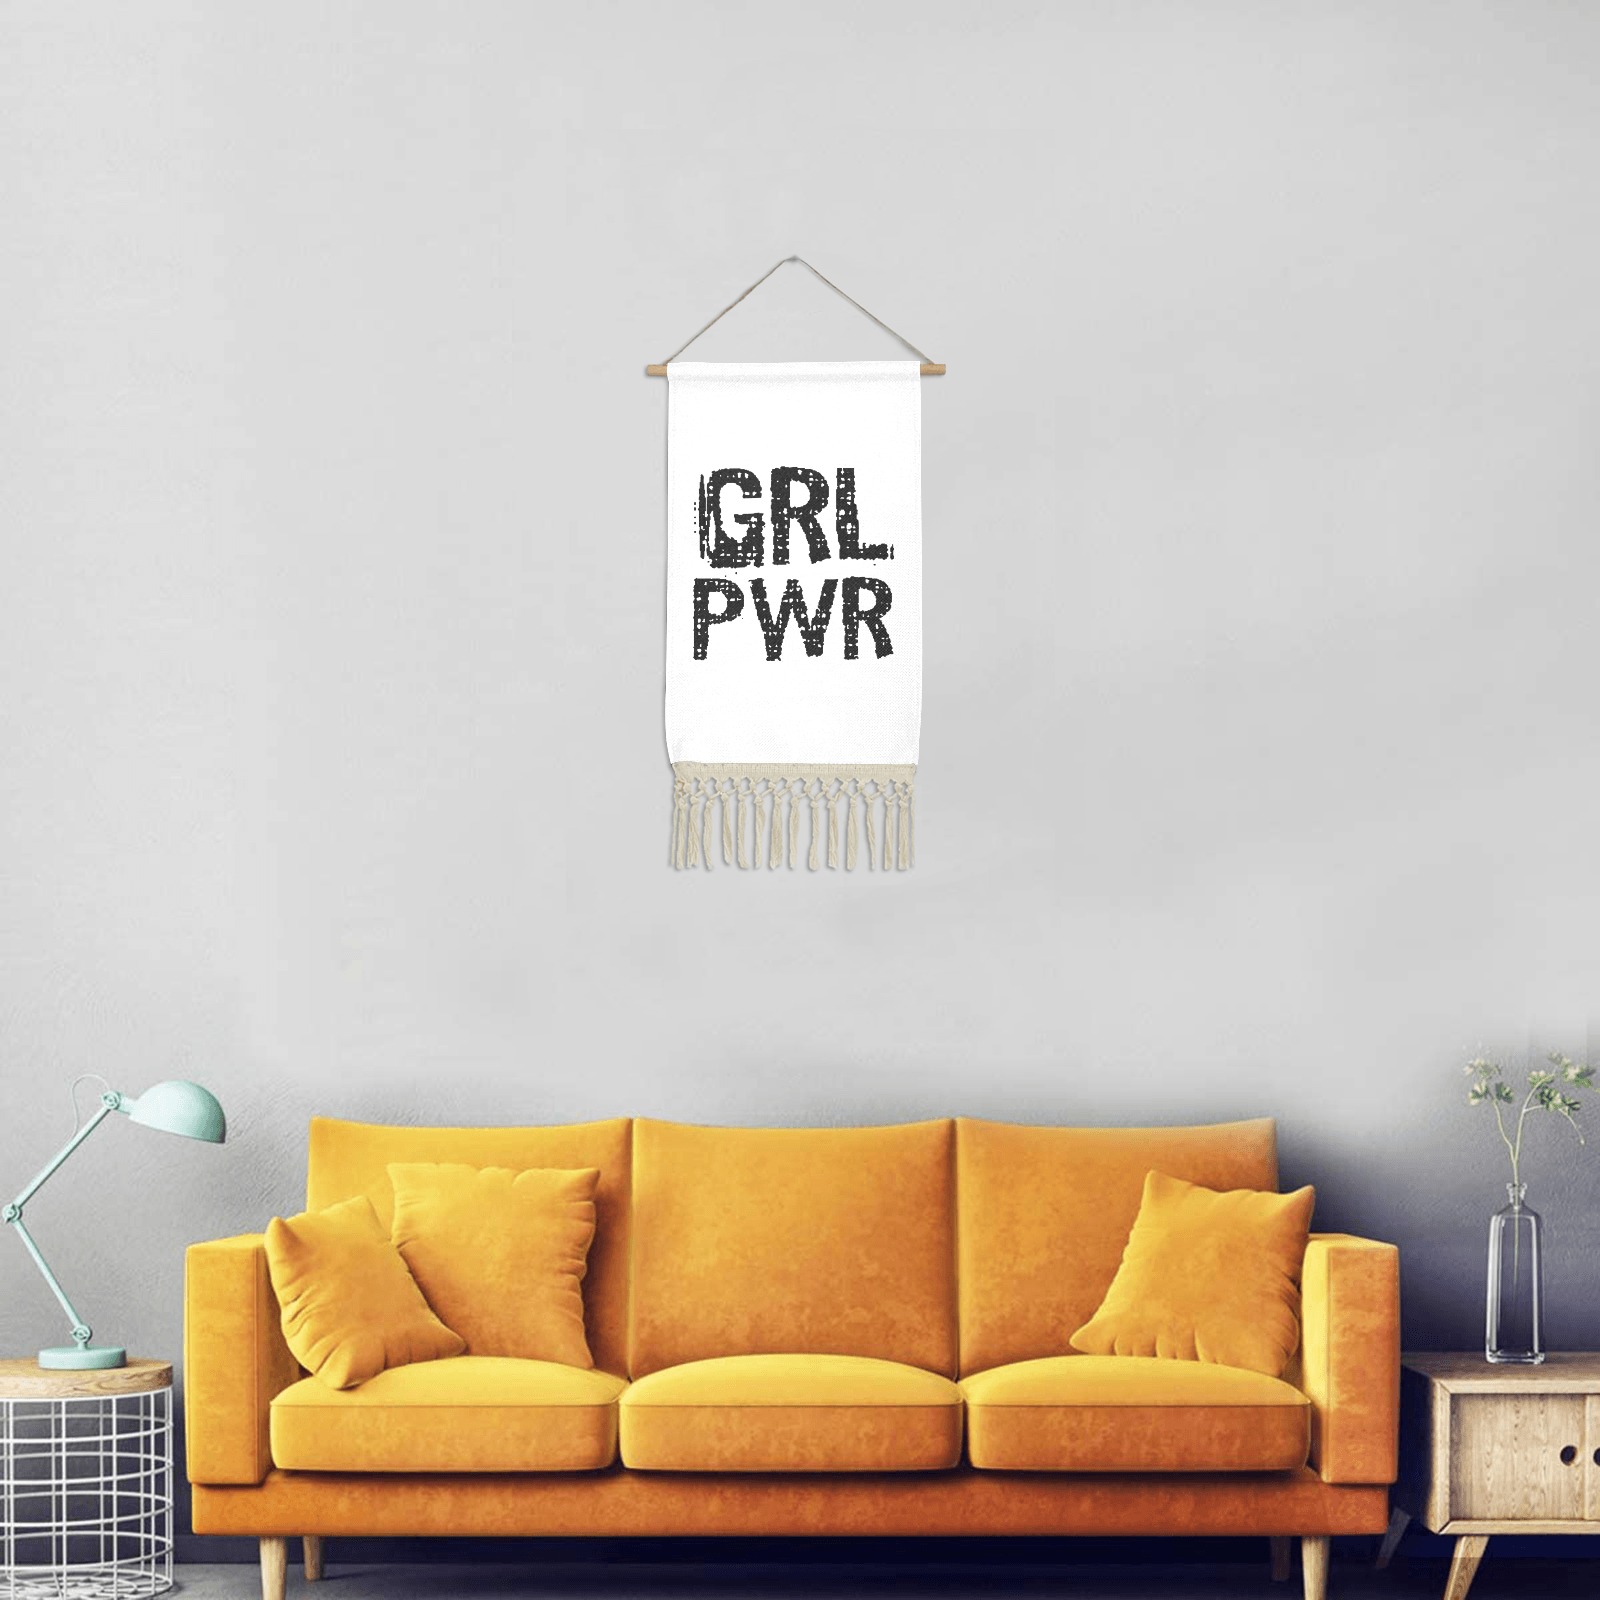 GRL PWR - Girl Power elegant black text. Linen Hanging Poster